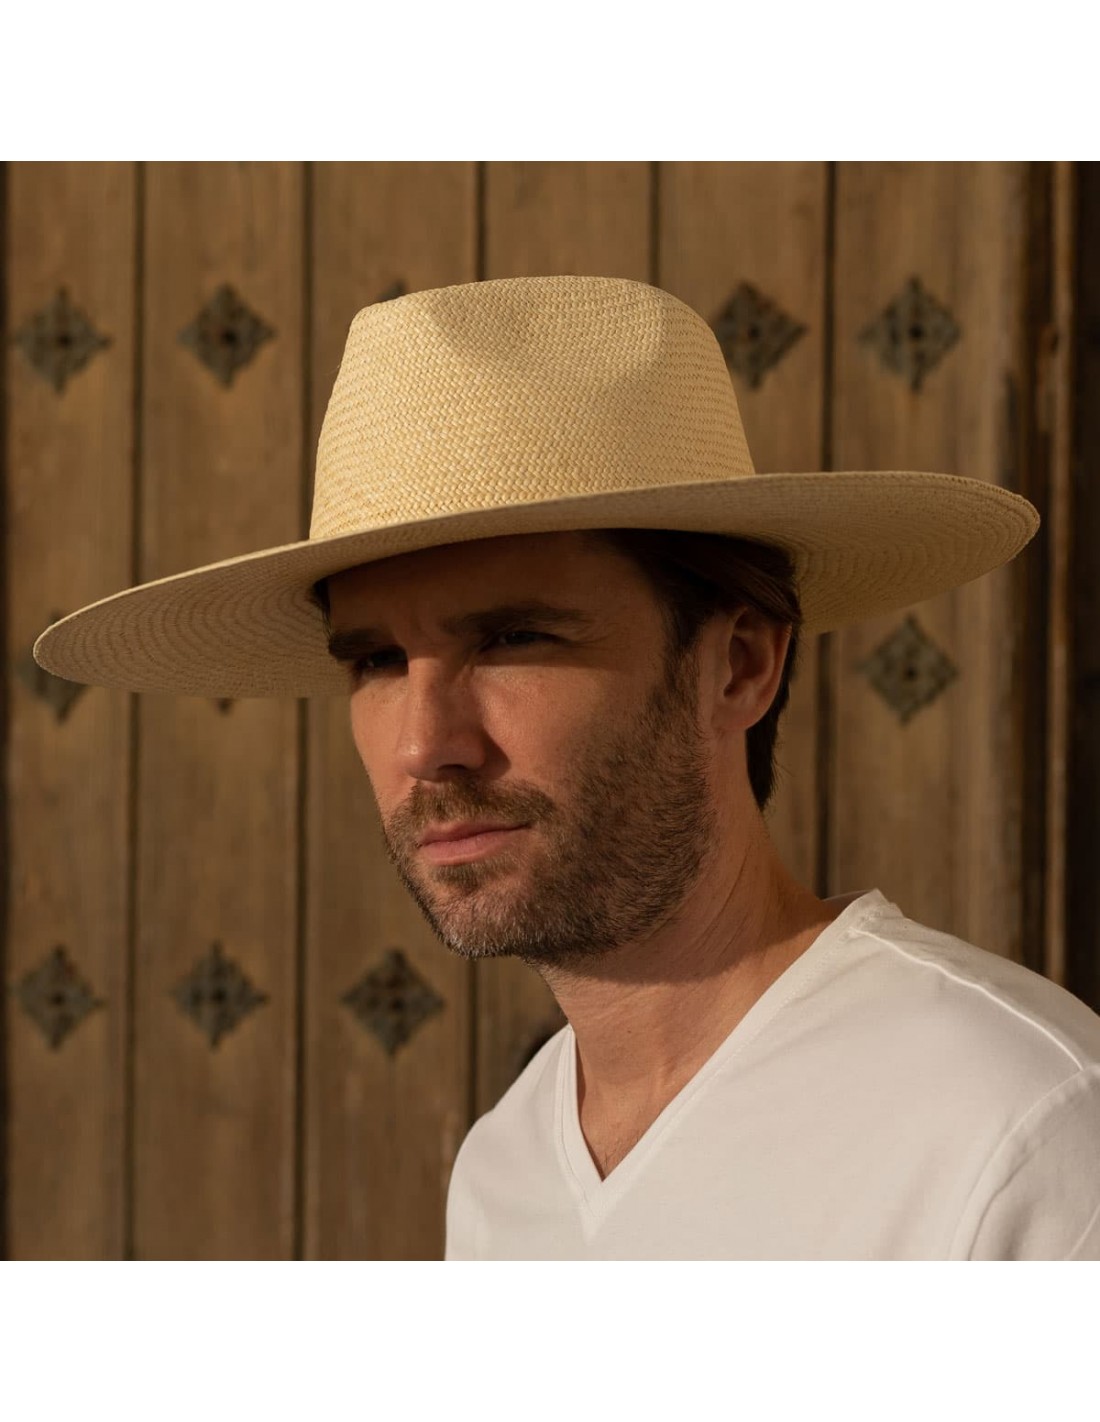 Shop Large Brim Panama Hat Natural Color for Men - Panama Hats UK